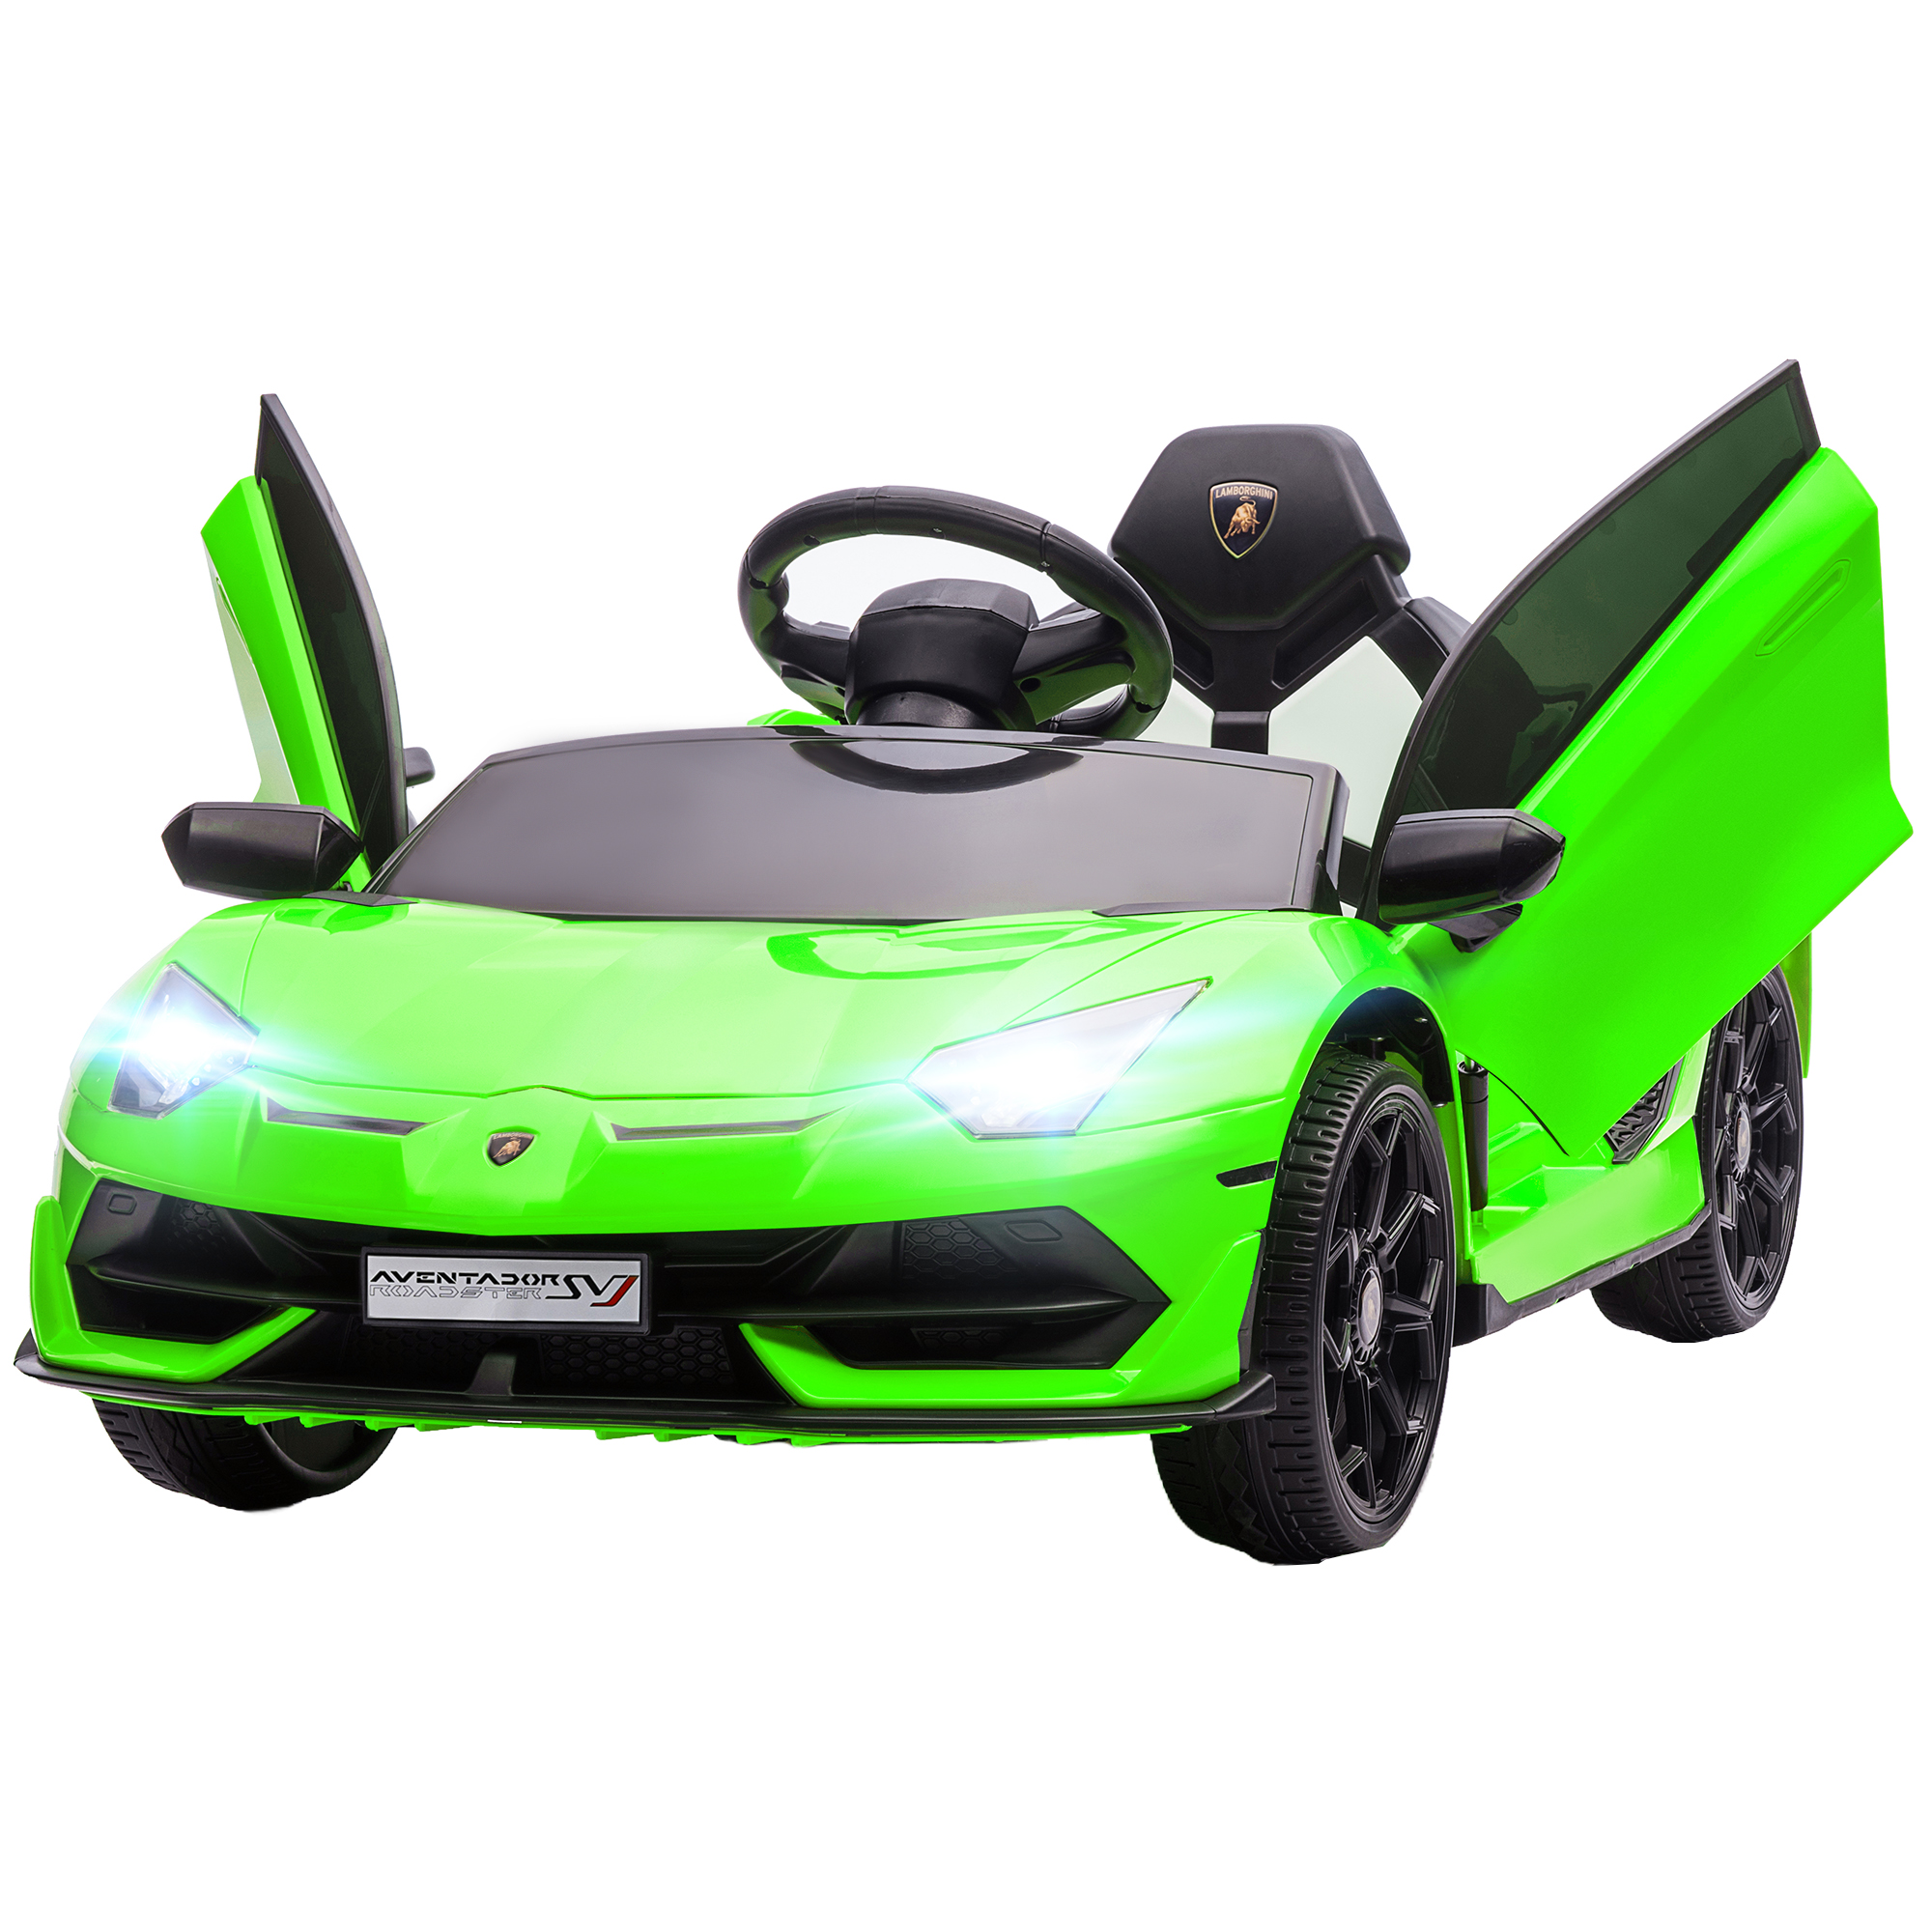 HOMCOM 12V Lamborghini Licenseded Electric Ride-On Toy Car for Children με Κόρνα και Τηλεχειριστήριο